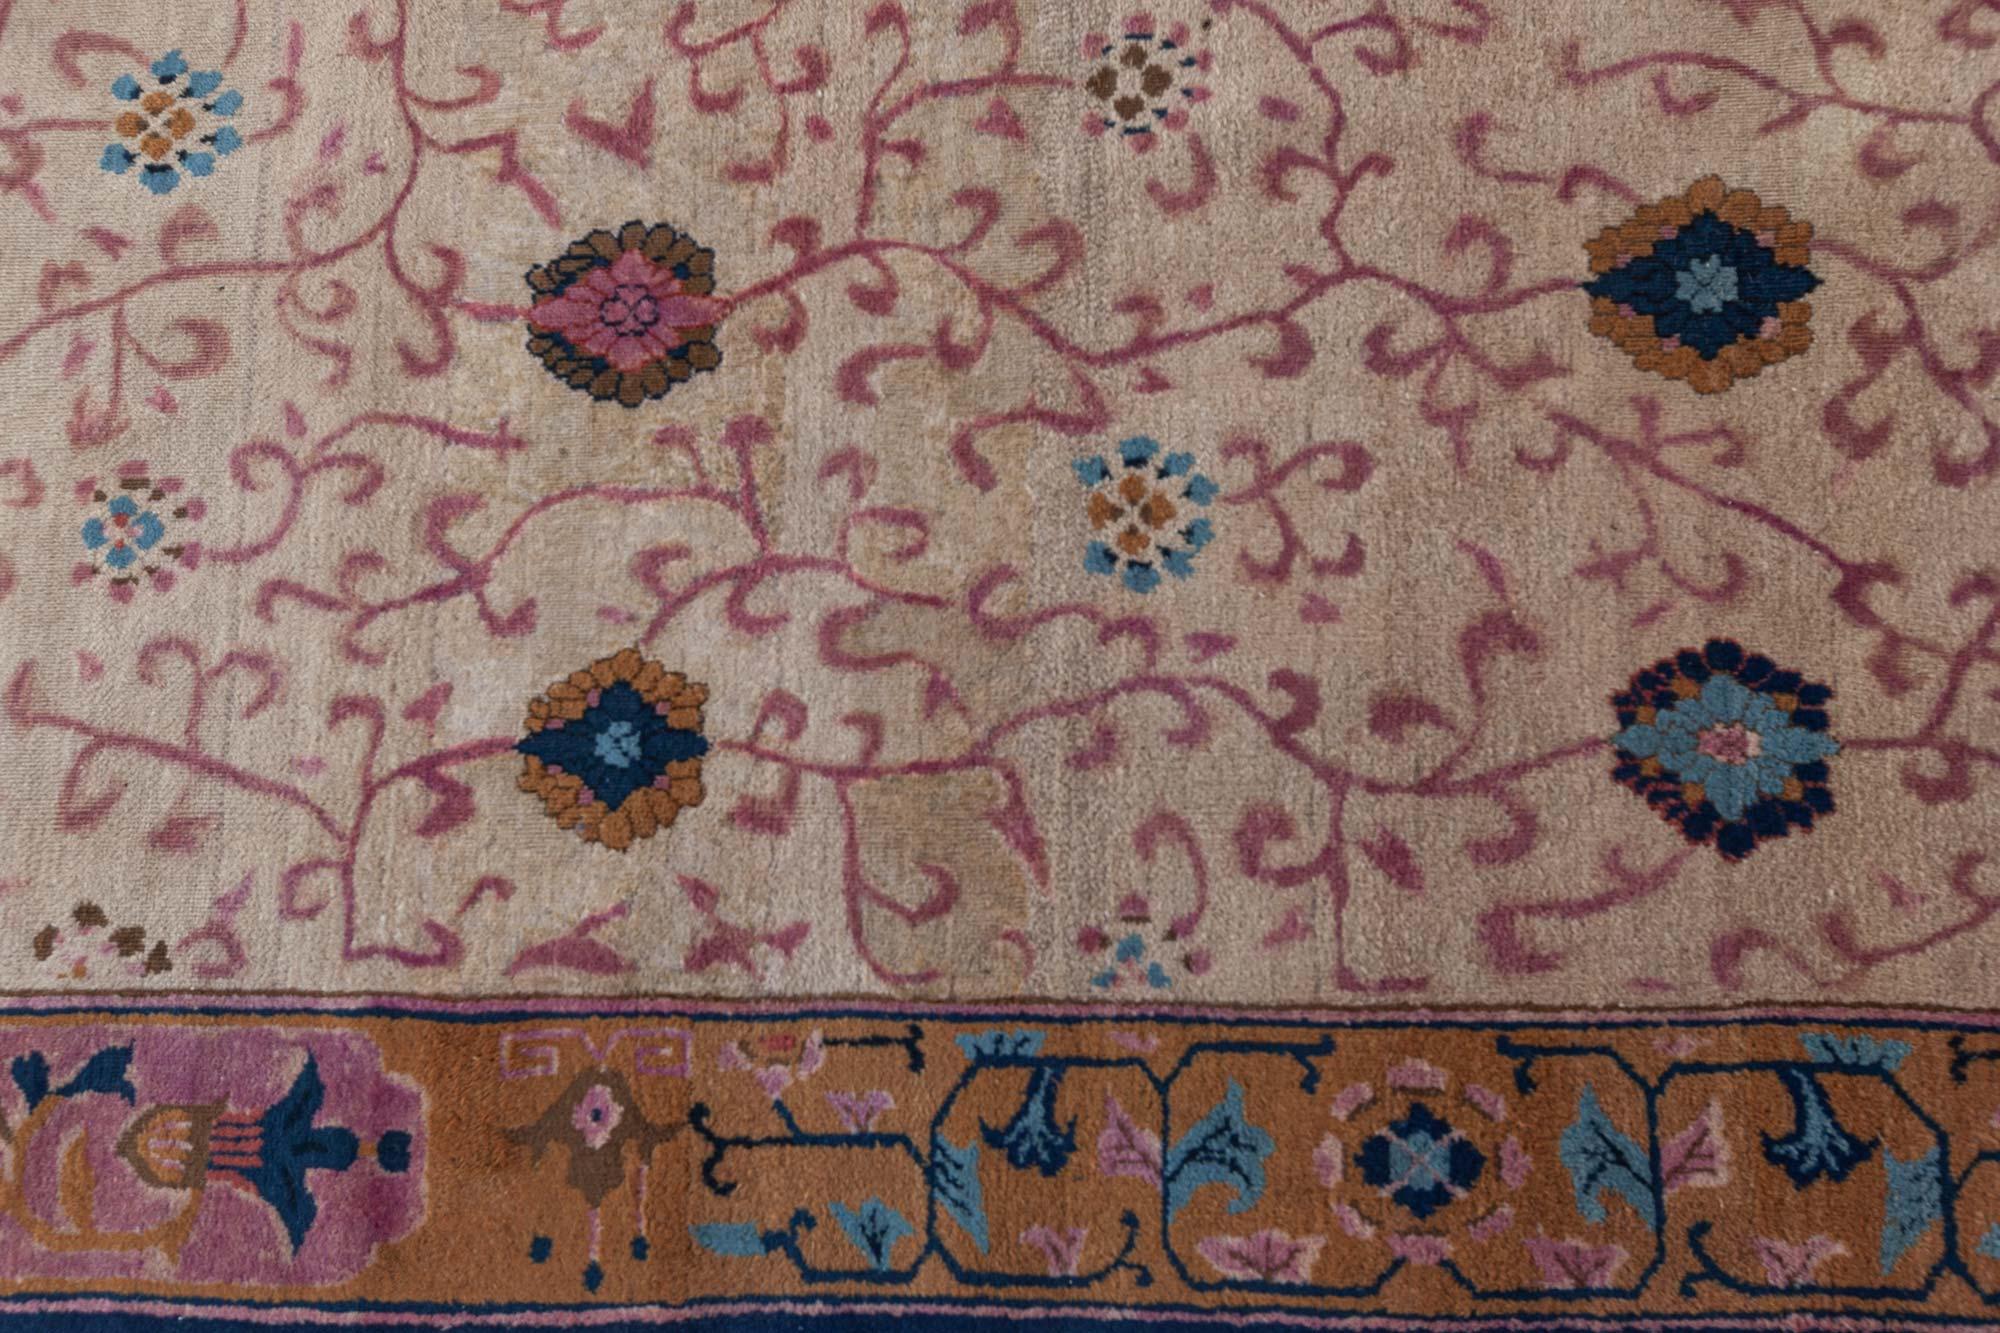 Antique Chinese rug (size adjusted) by Doris Leslie Blau.
Size: 13'8